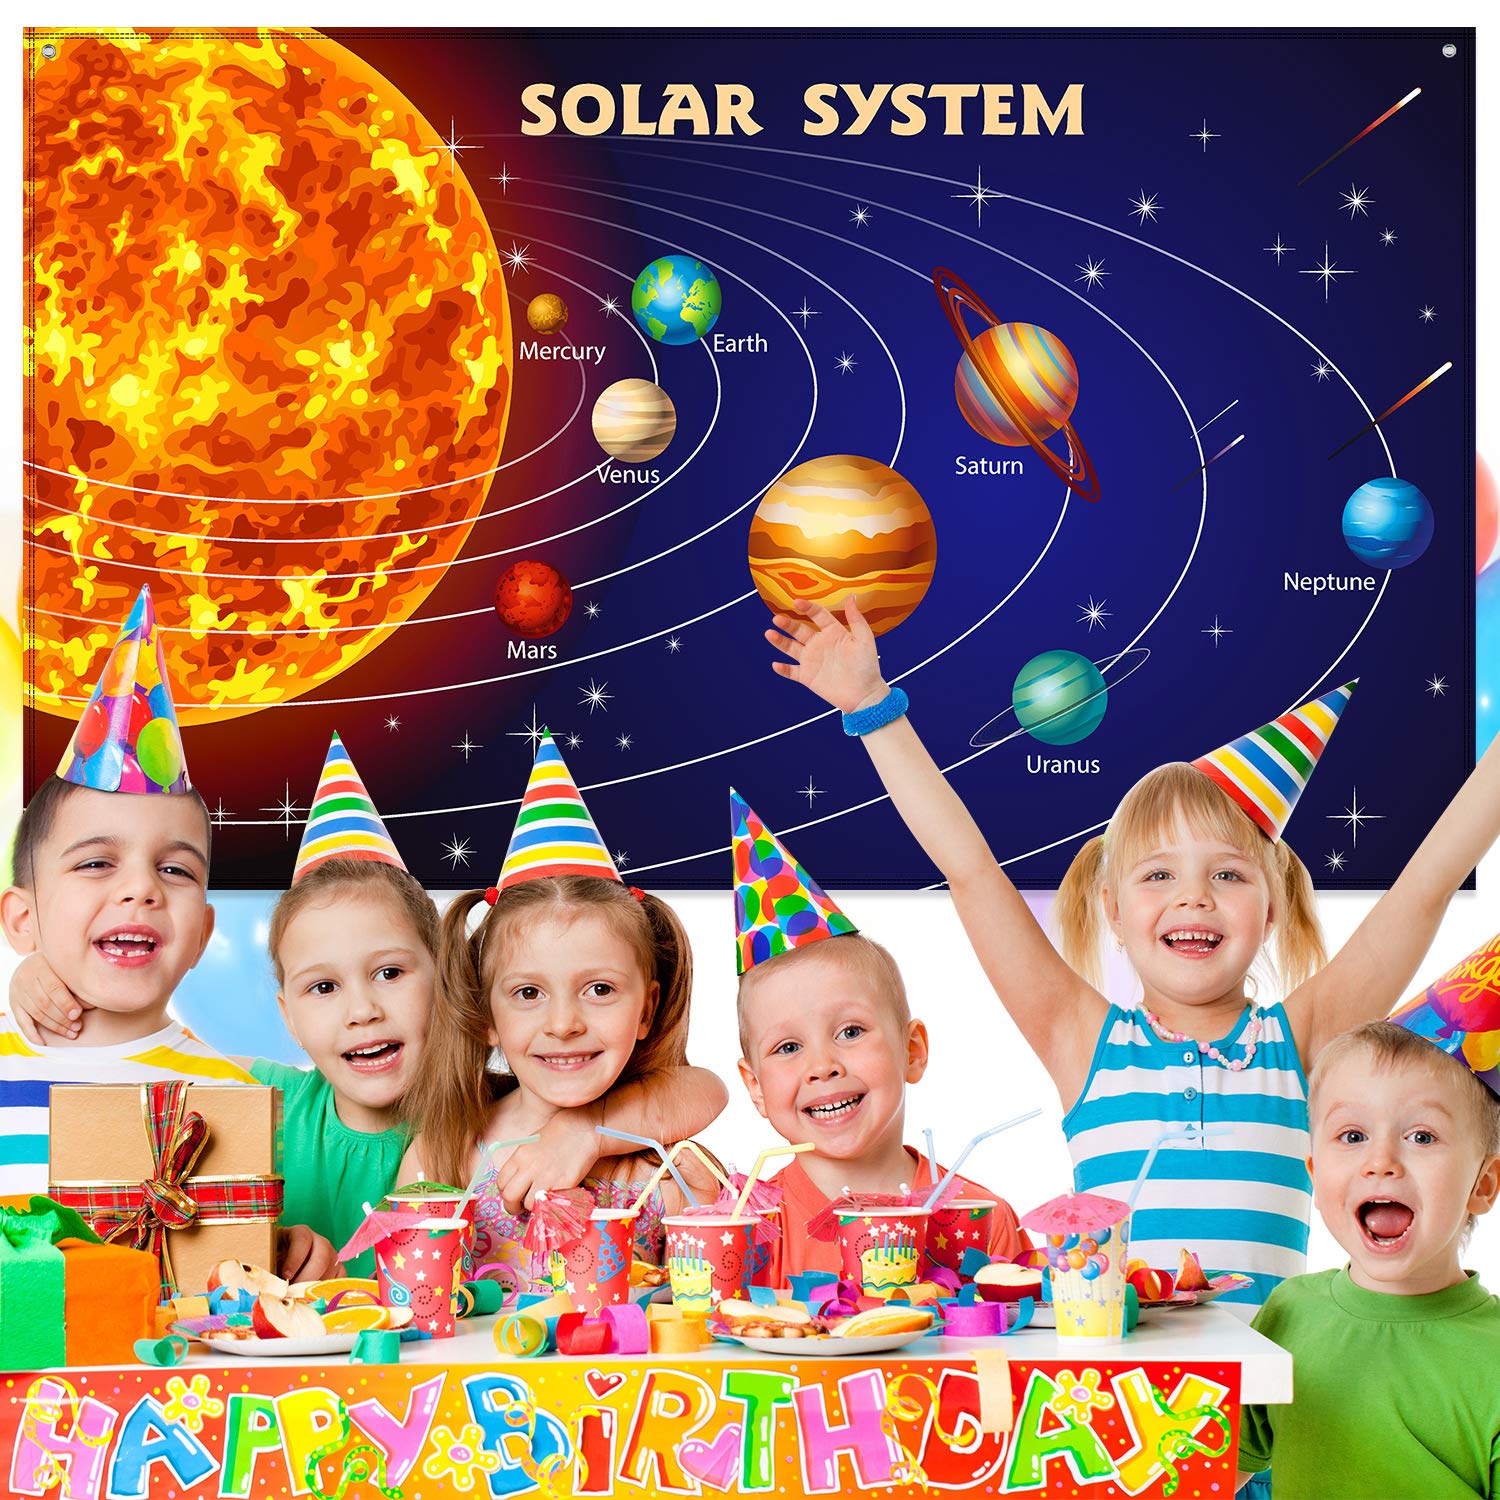 solar system party ideas